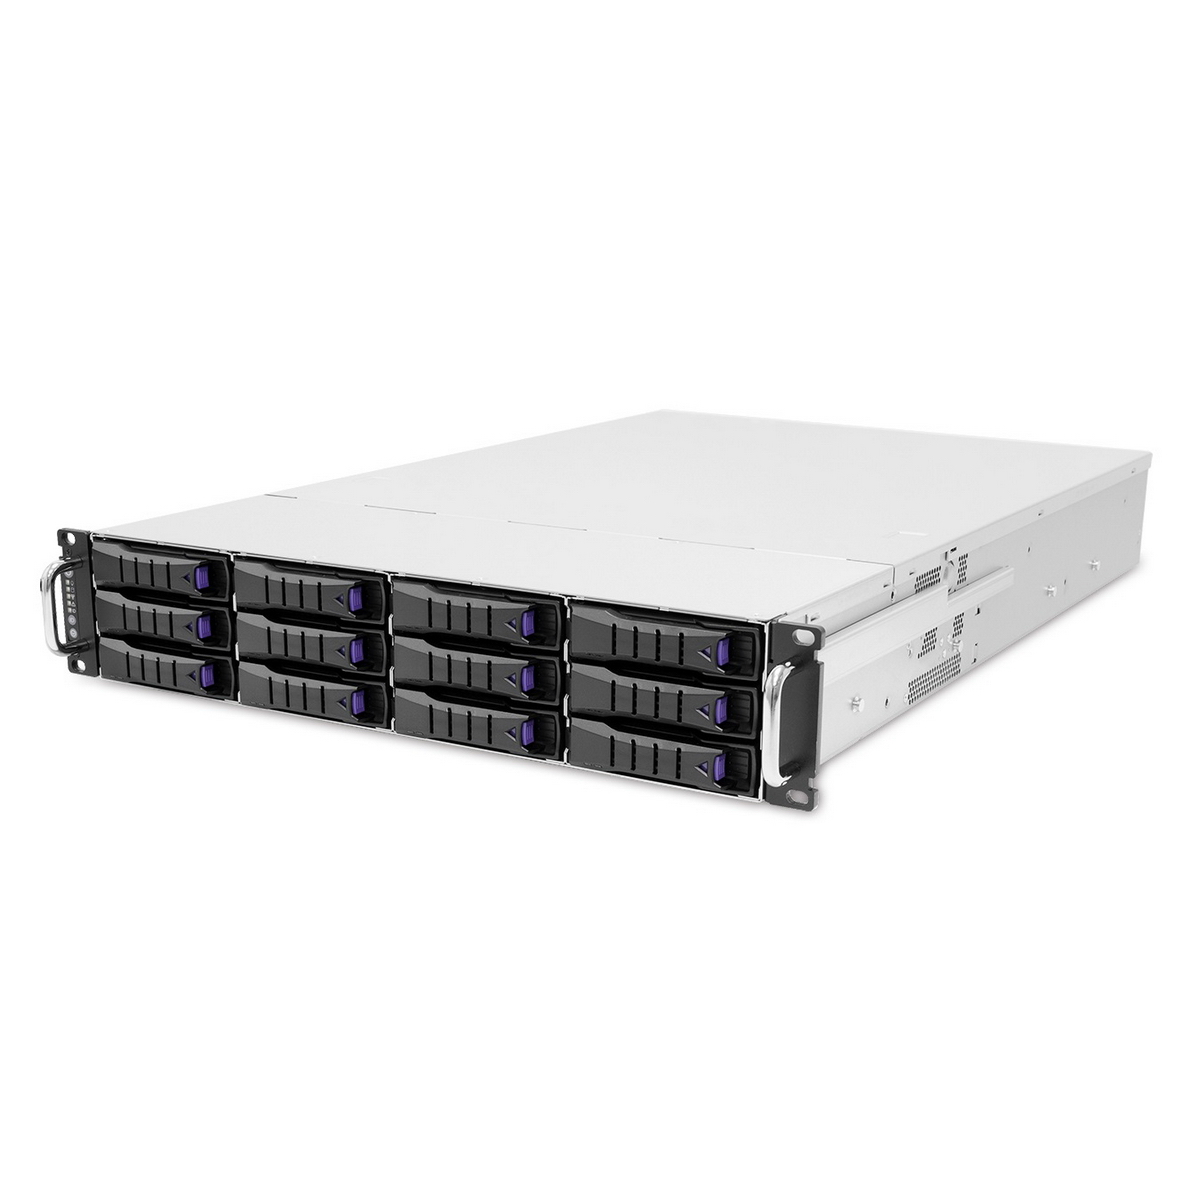 AIC 2U 12-bay Storage Server (SB202-TU)